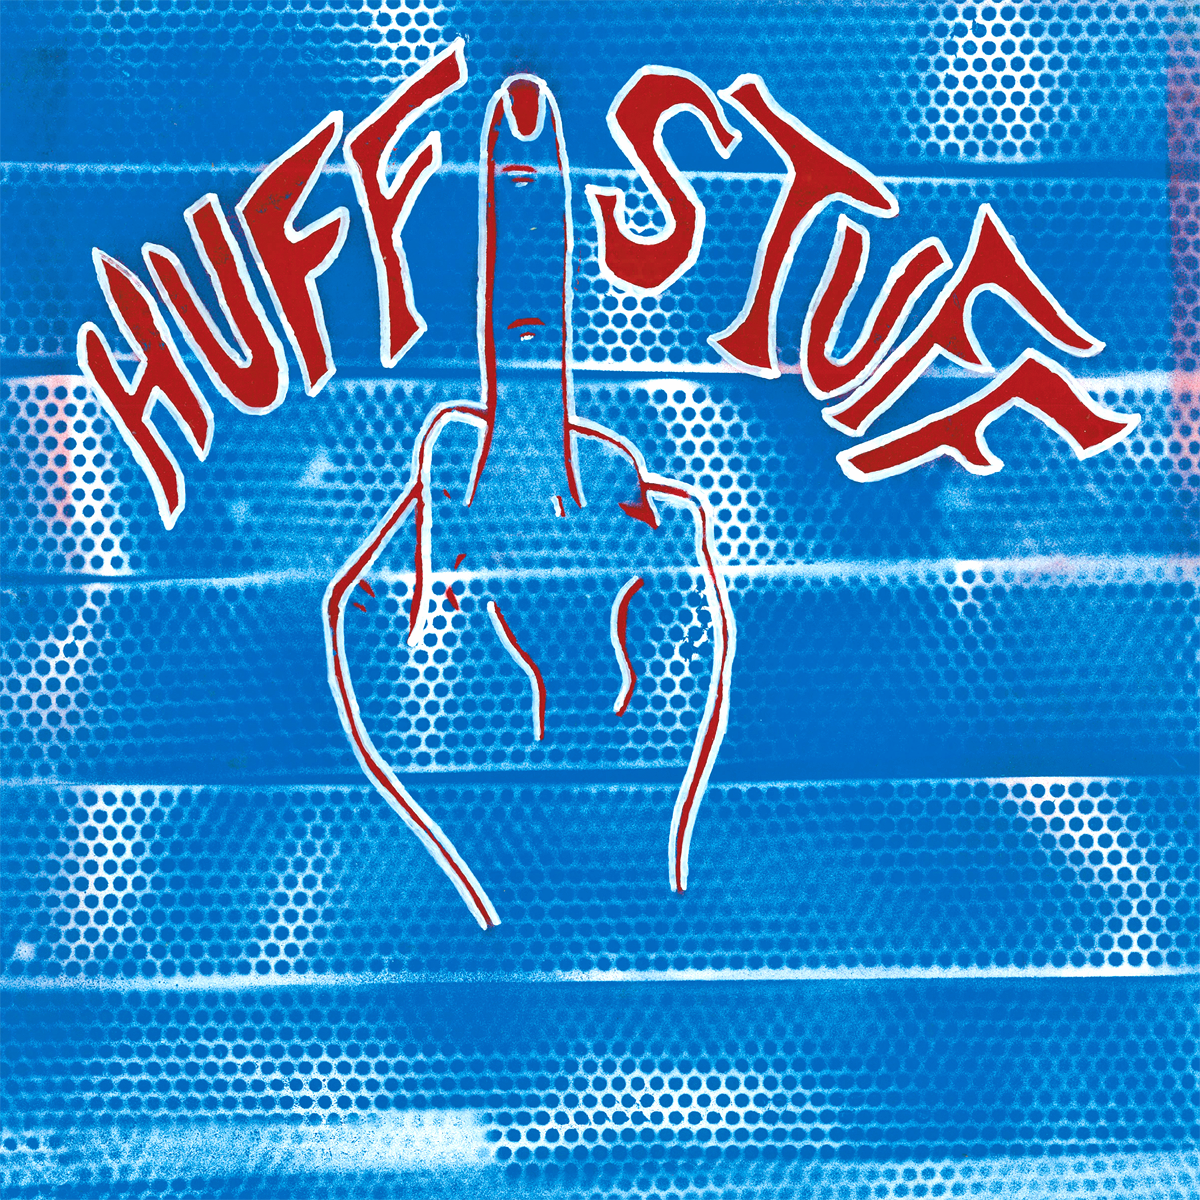 Huff Stuff Magazine- Sugar Mountain LP ~BLUE WAX LTD TO 100!